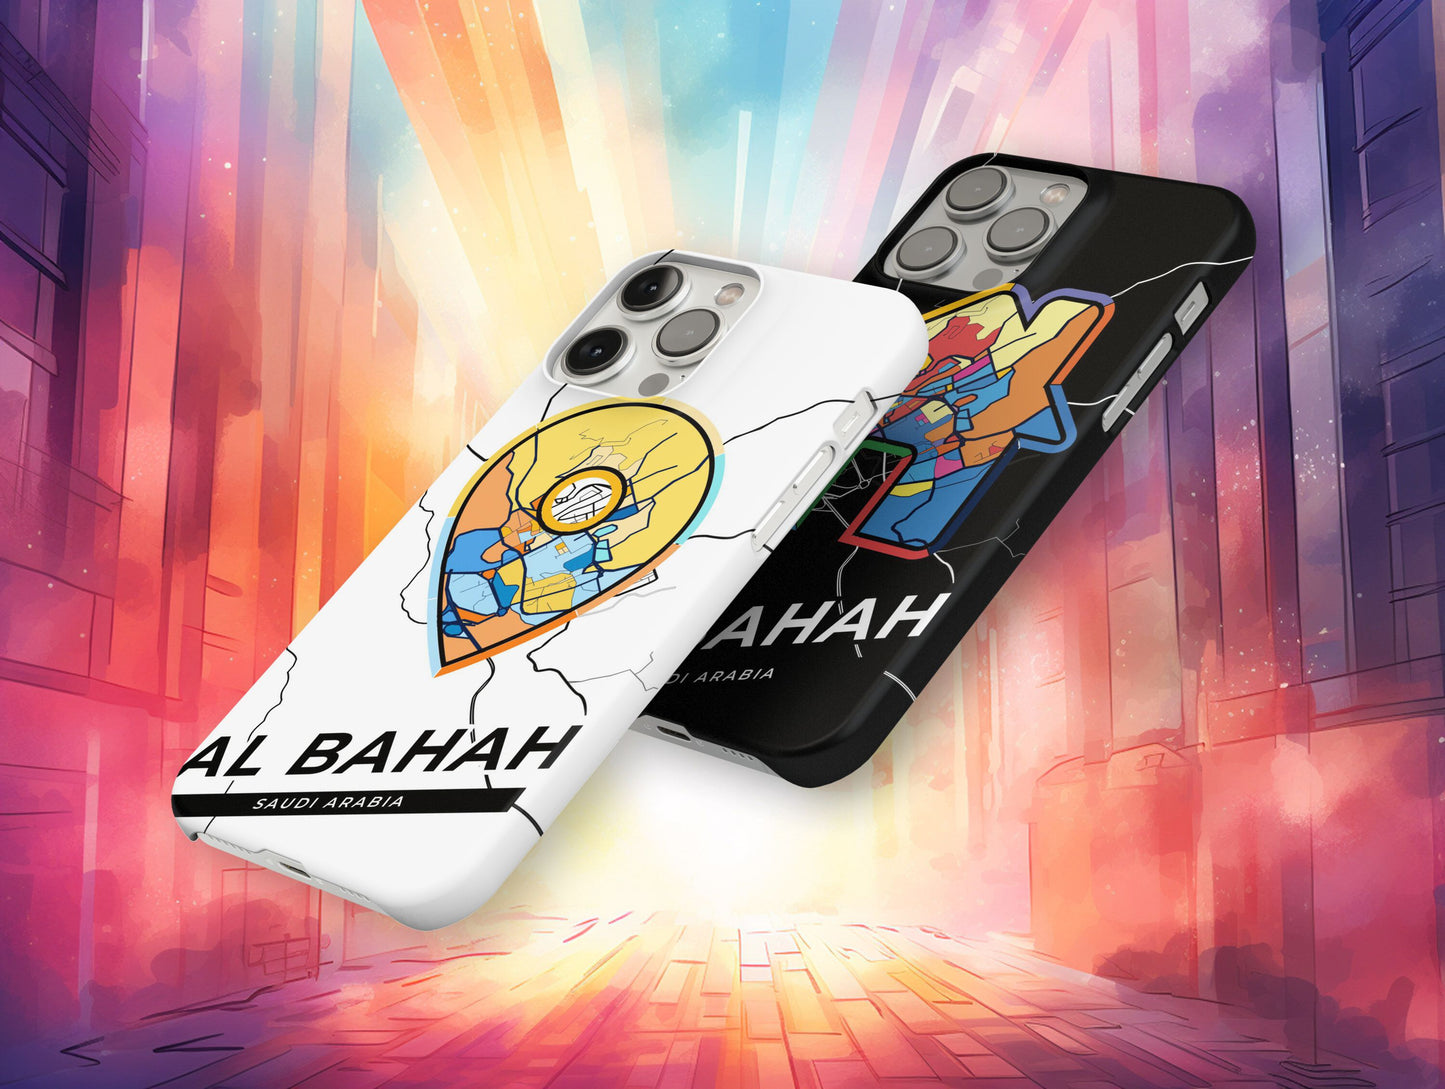 Al Bahah Saudi Arabia slim phone case with colorful icon. Birthday, wedding or housewarming gift. Couple match cases.